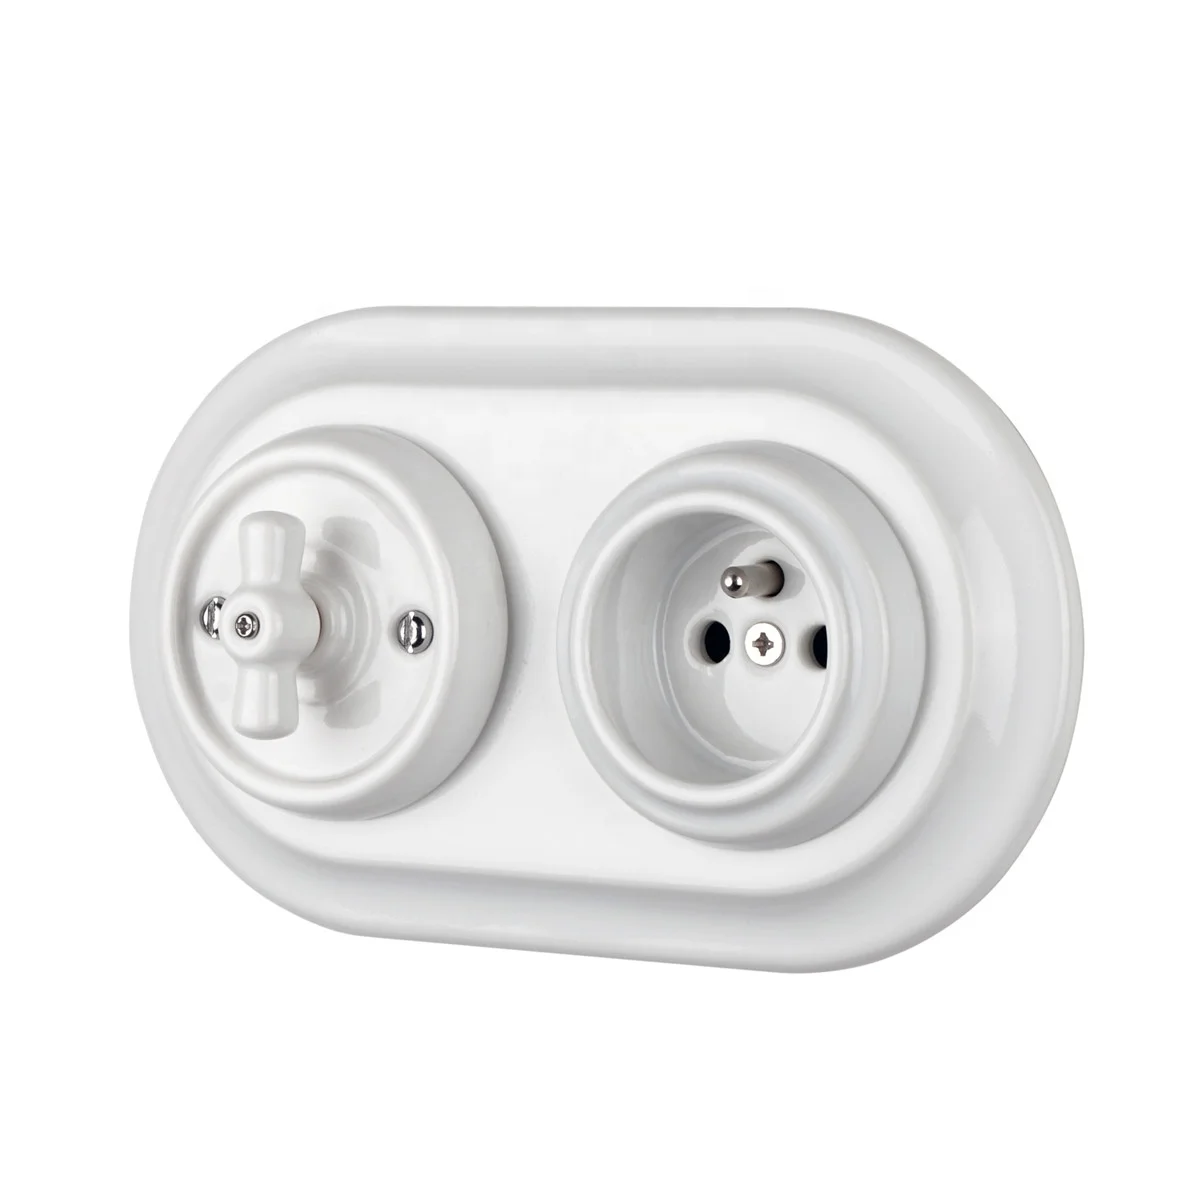 Porcelain LED Dimmer switch